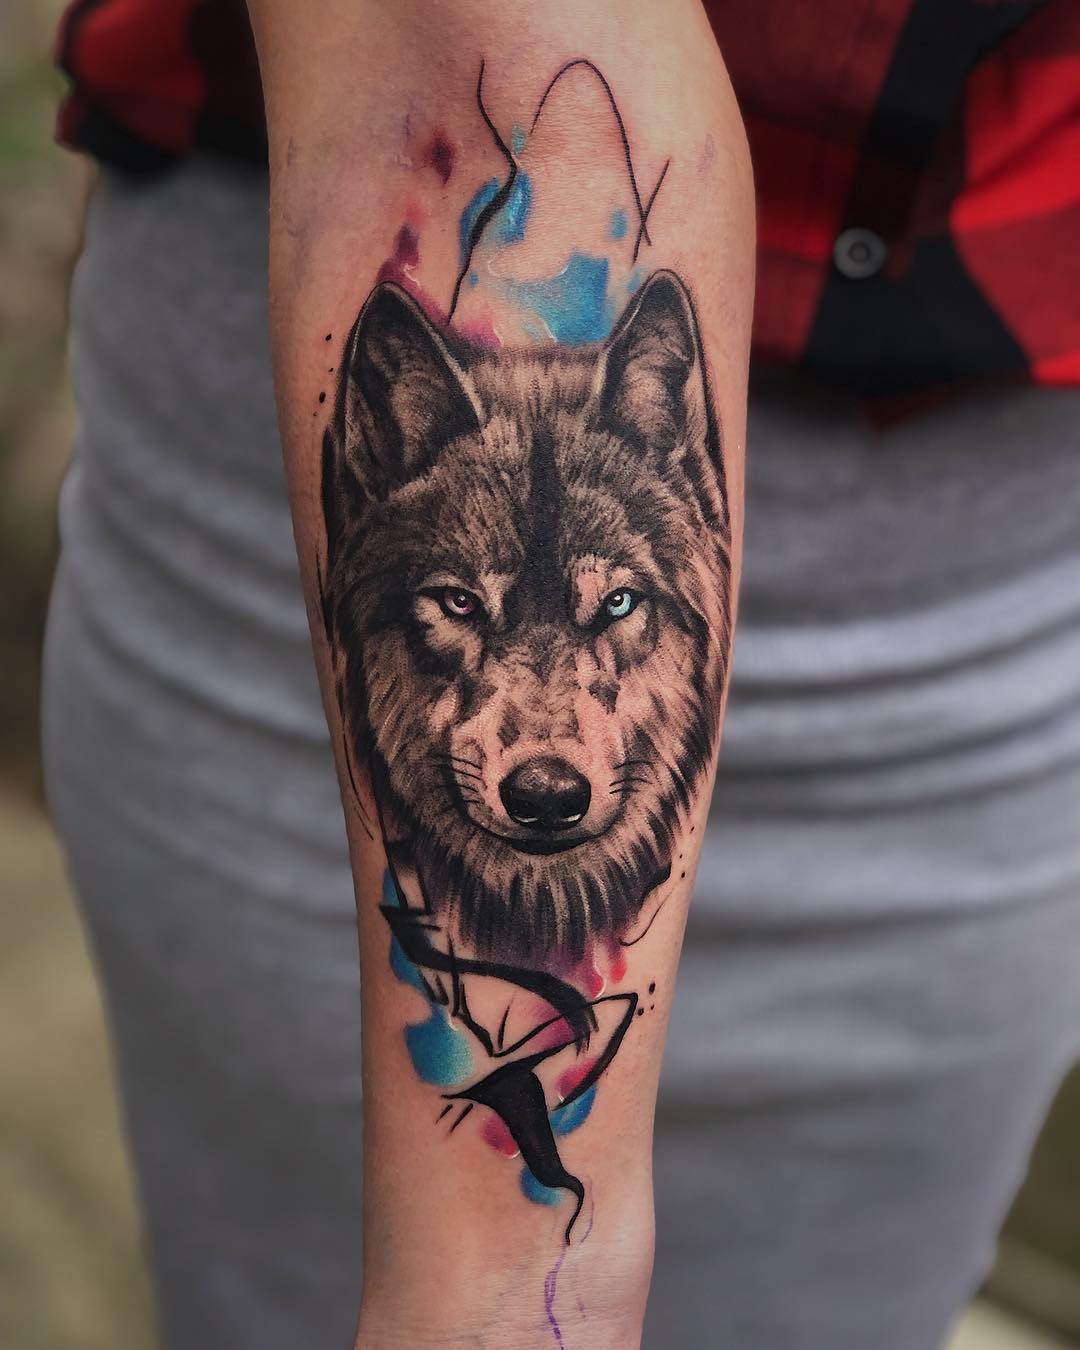 tattoo avant bras femme tatouage tete de loup touches aquarelle